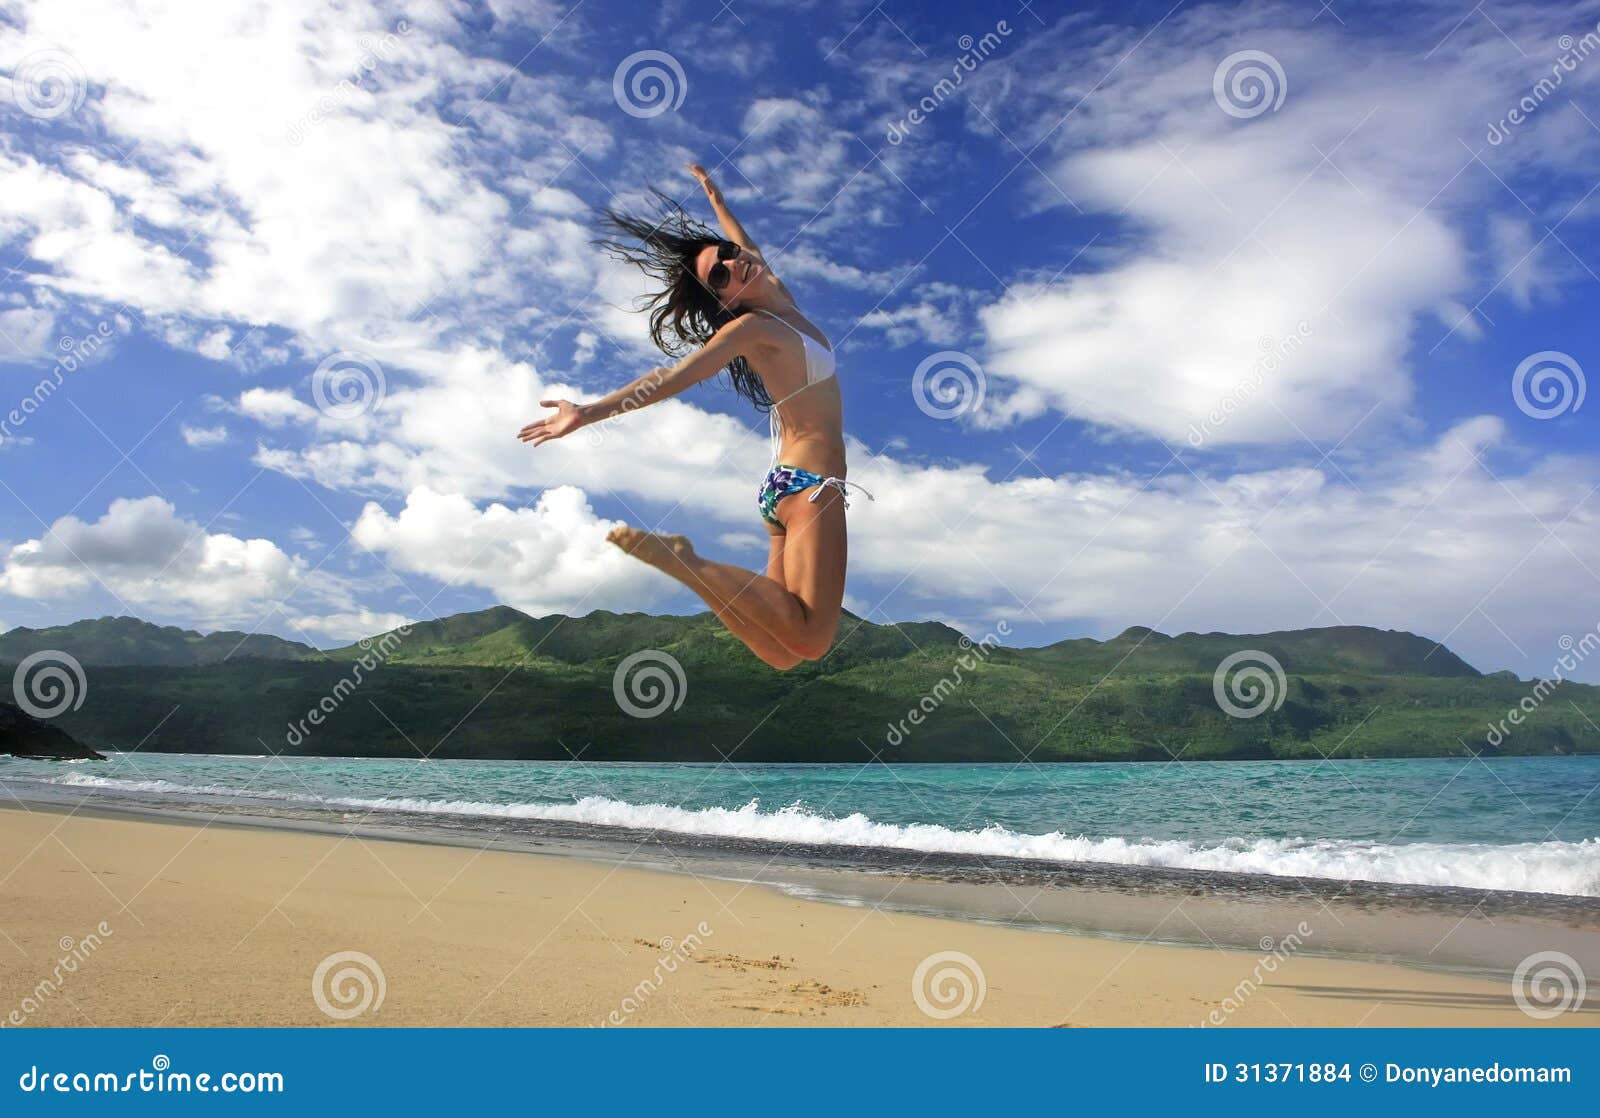 young woman in bikini jumping at rincon beach, samana peninsula